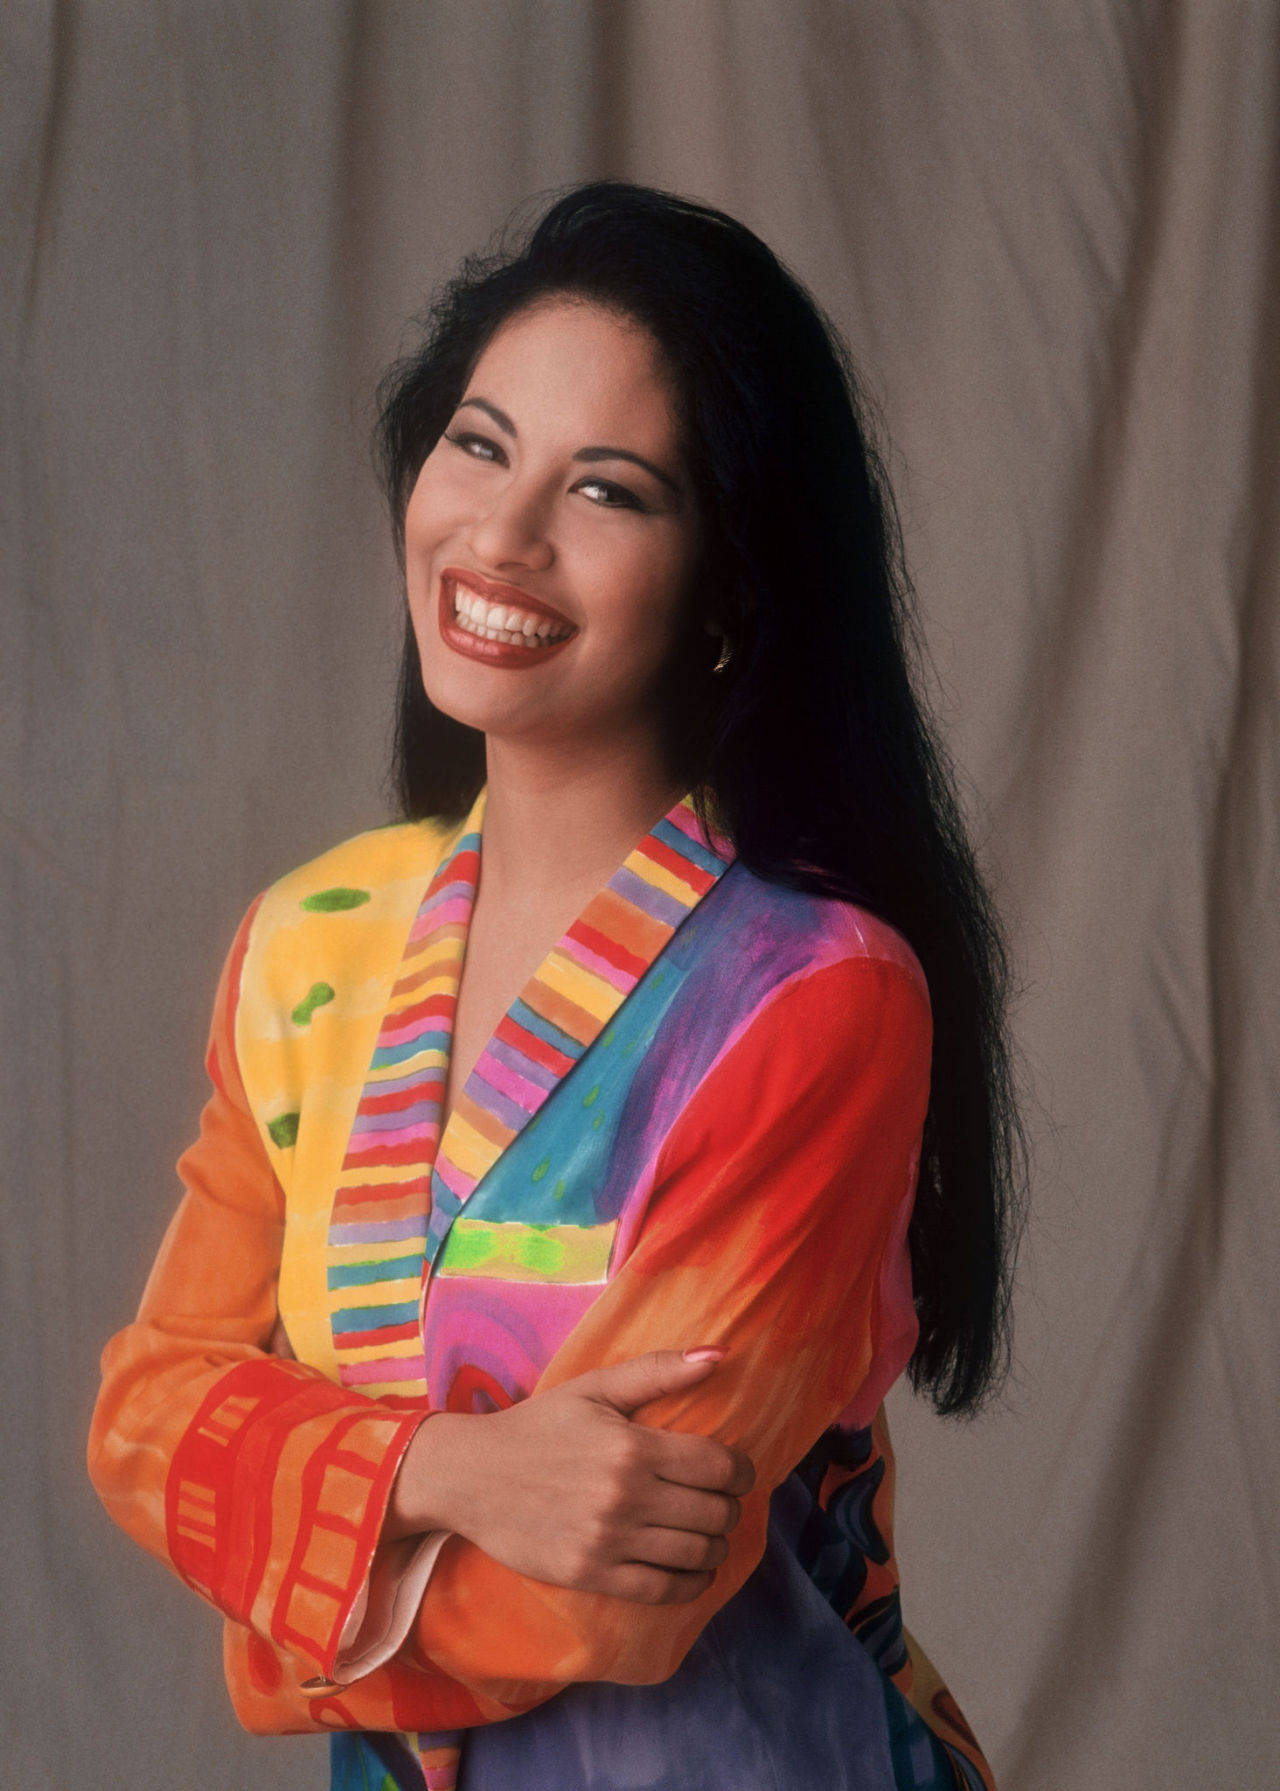 Selena Quintanilla Sweet Smile Wallpaper